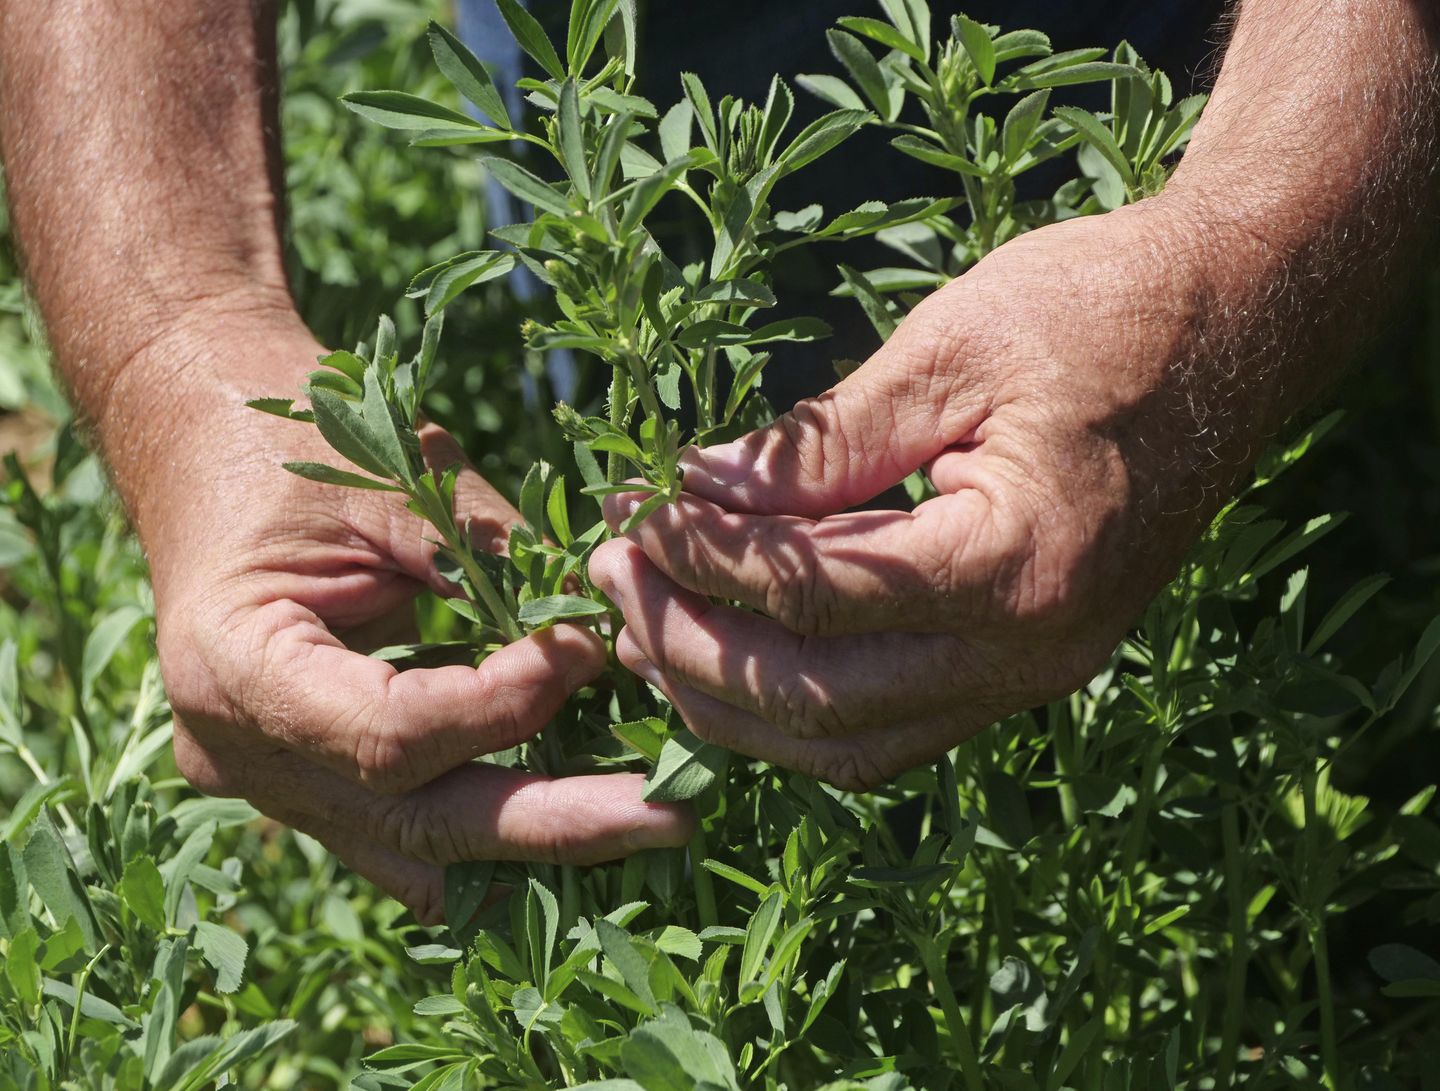 Penarikan kecambah alfalfa yang terkait dengan wabah salmonella meluas